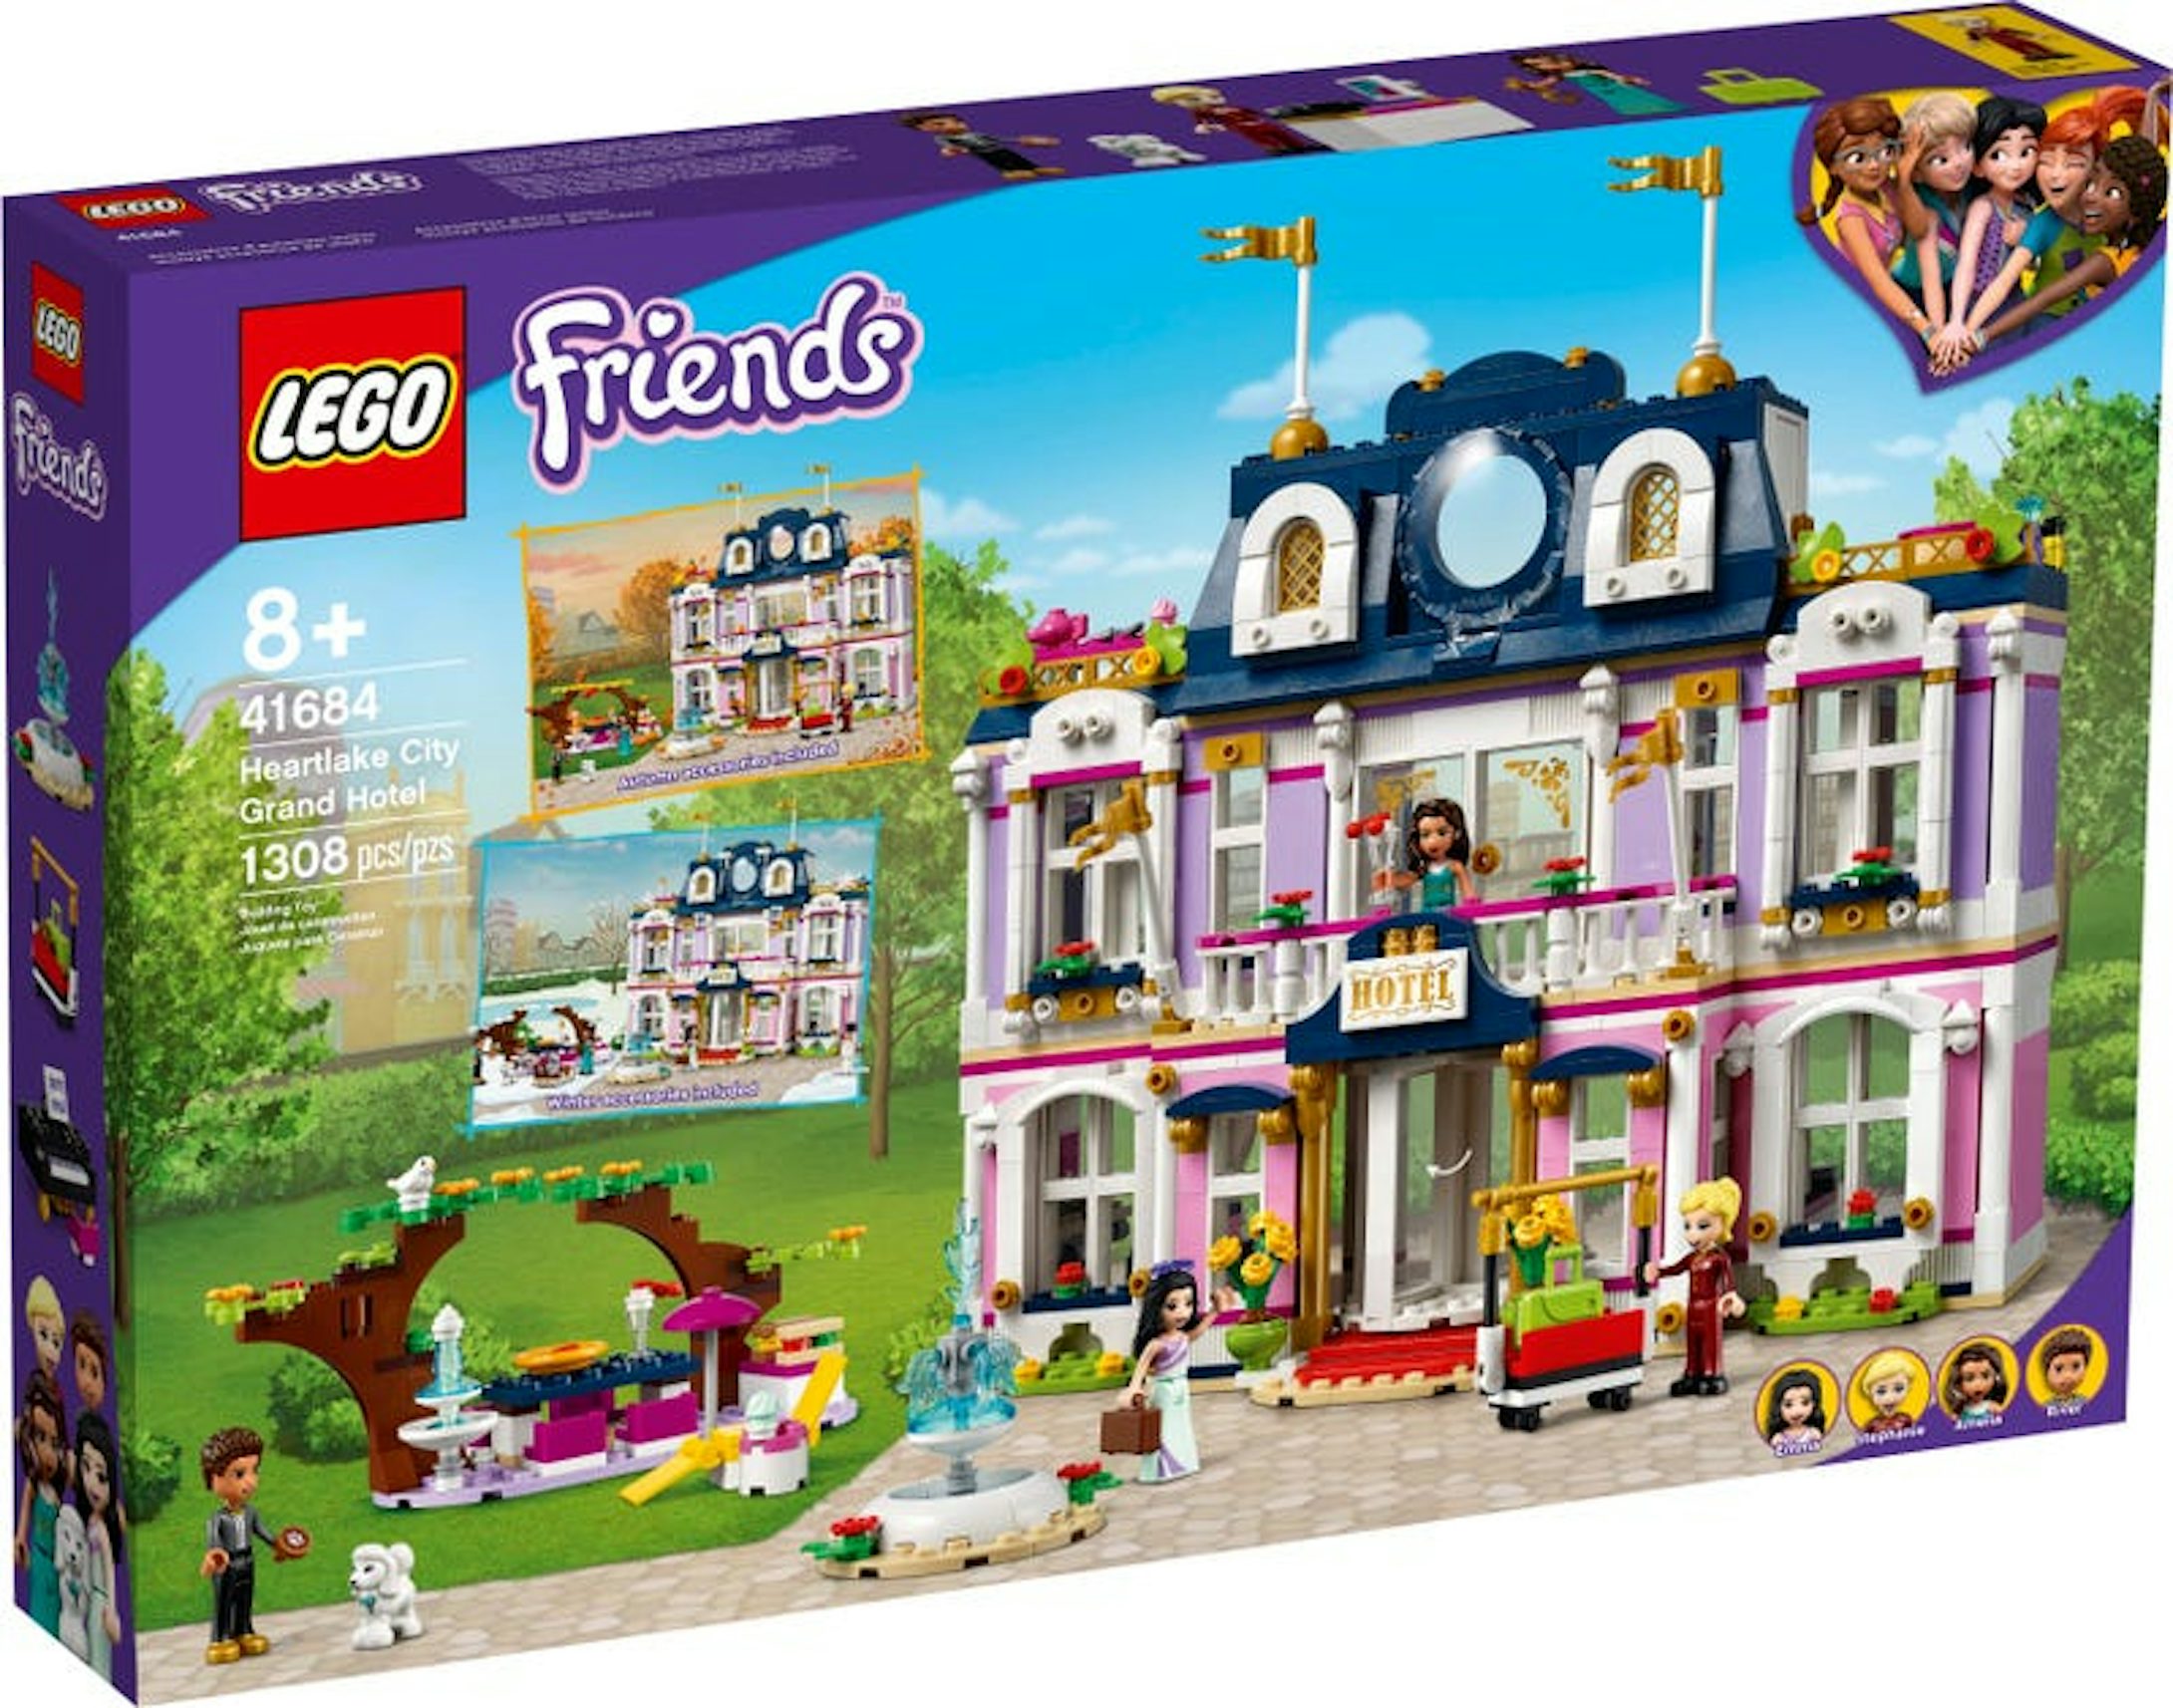 Friends LEGO Set: Hotel, Hospital & Mall